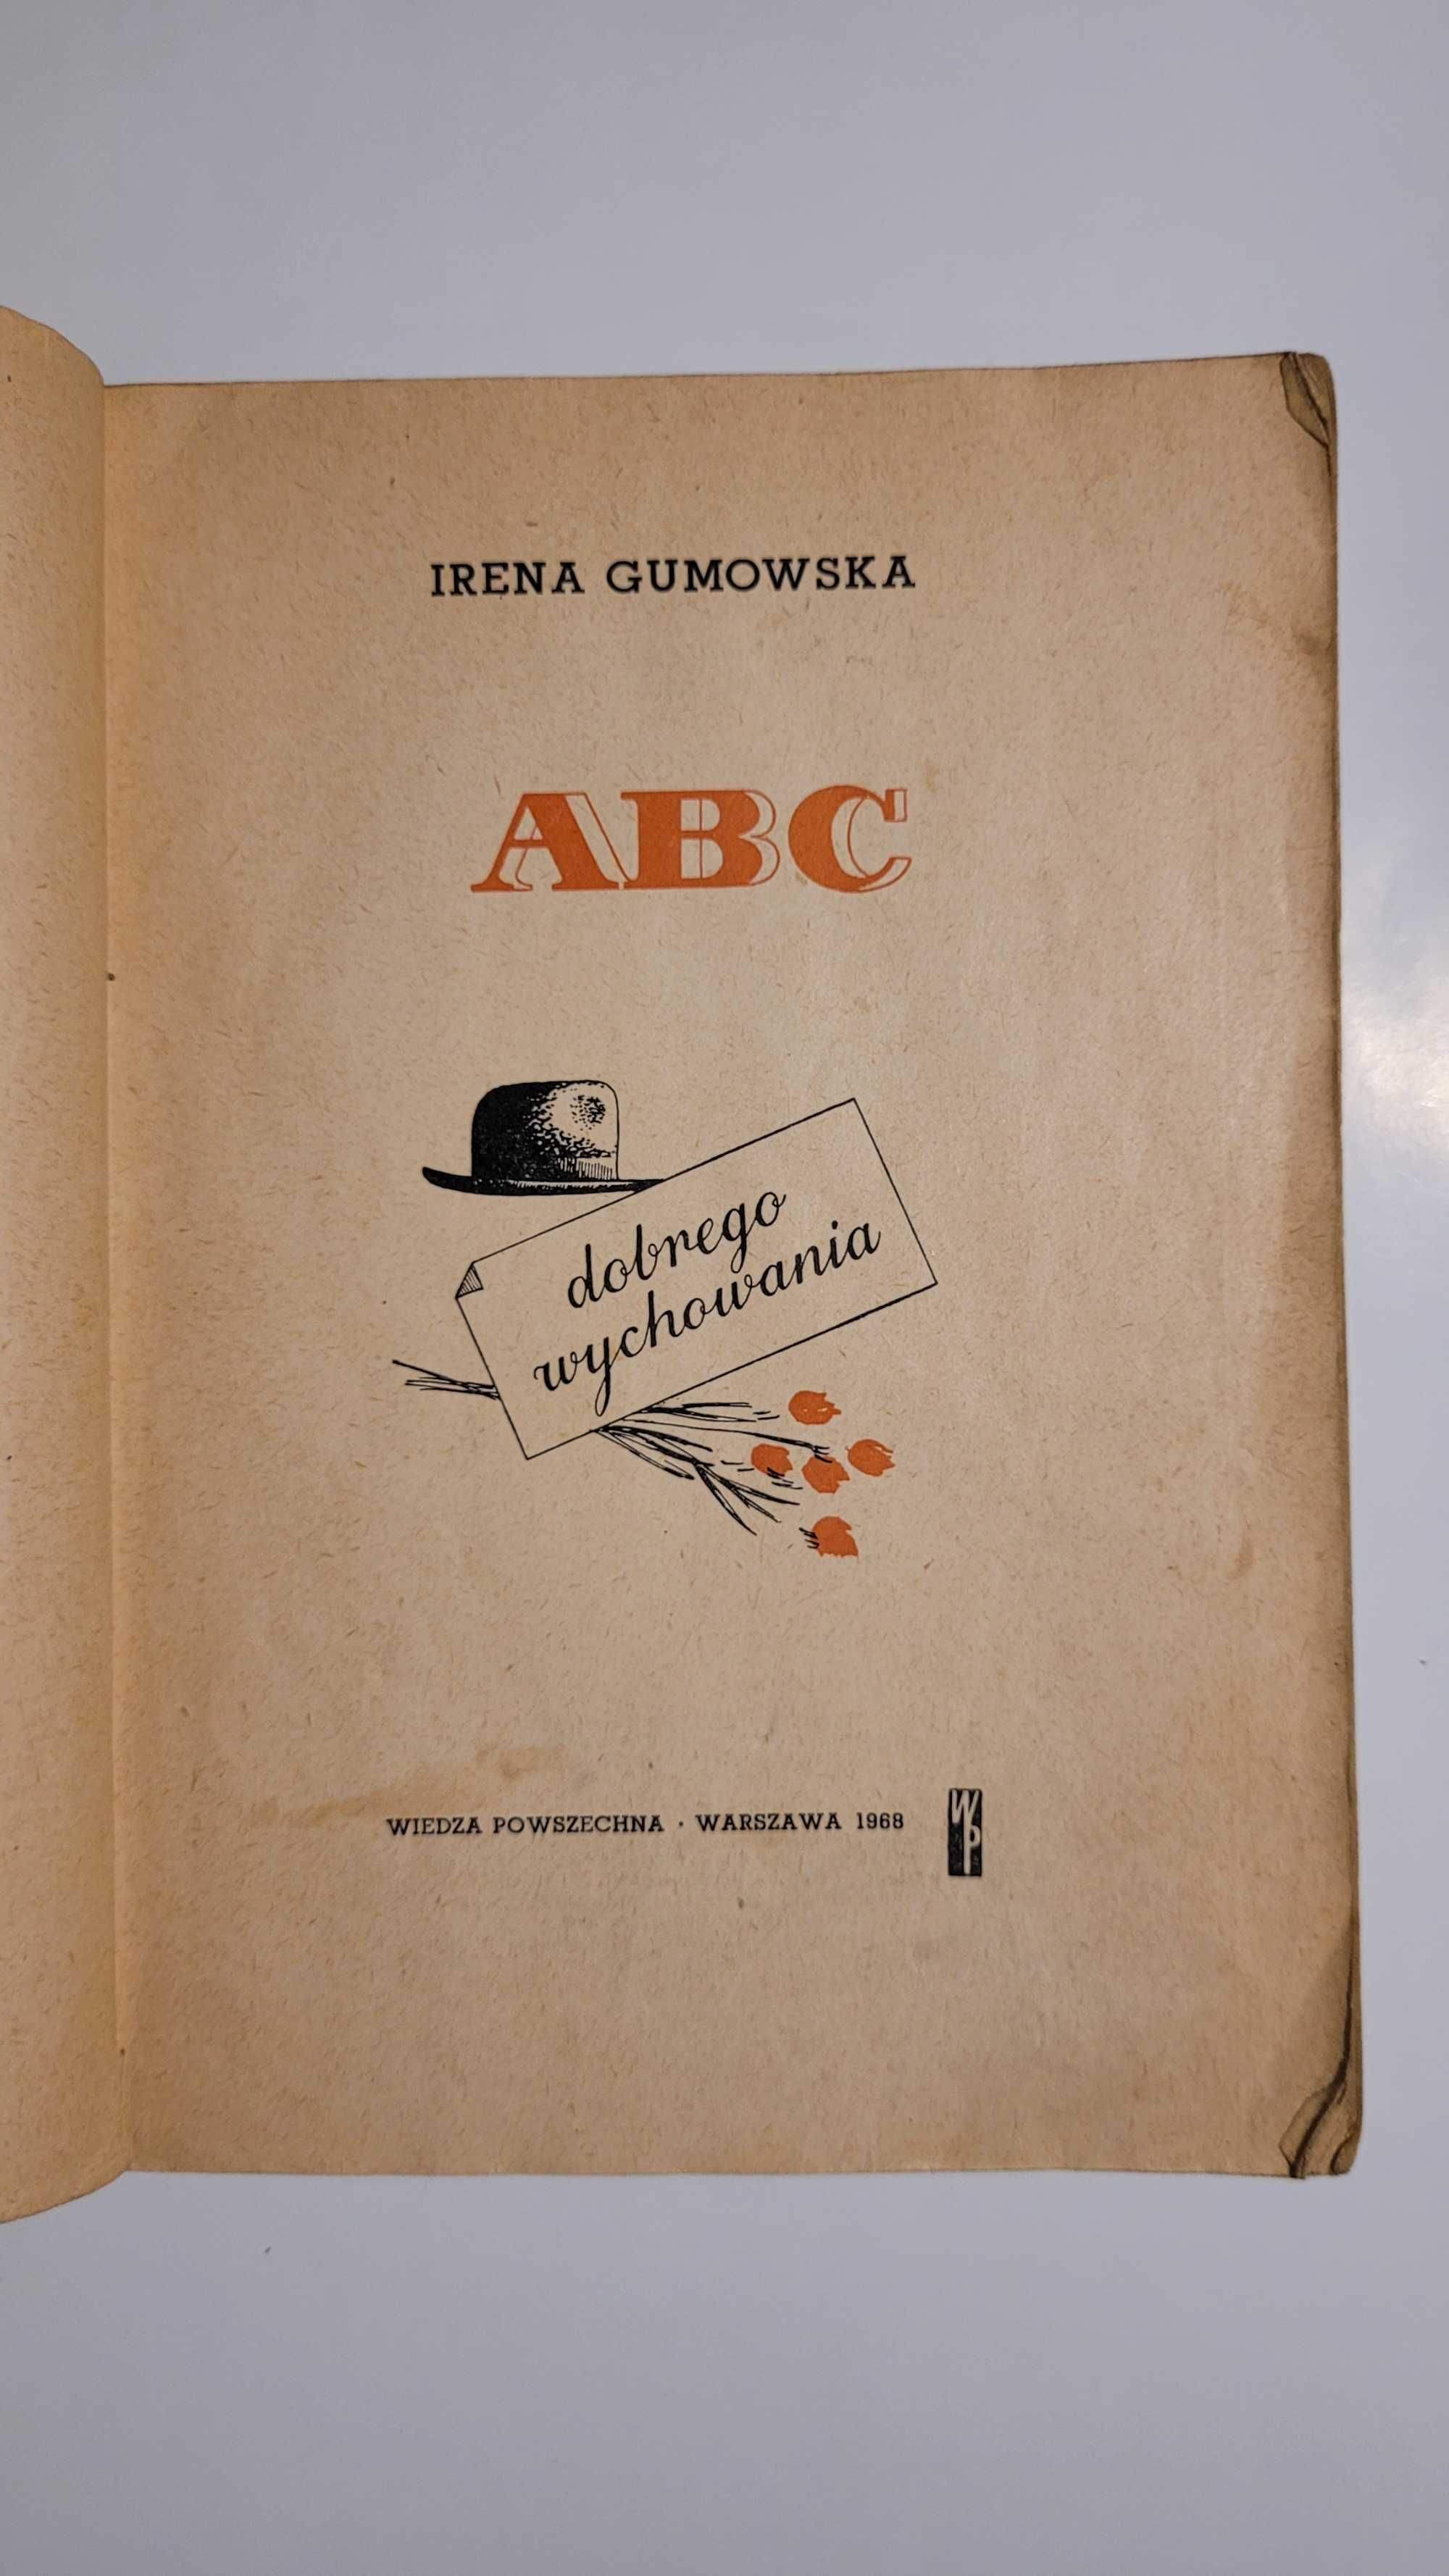 "ABC dobrego wychowania", Irena Gumowska, savoir vivre